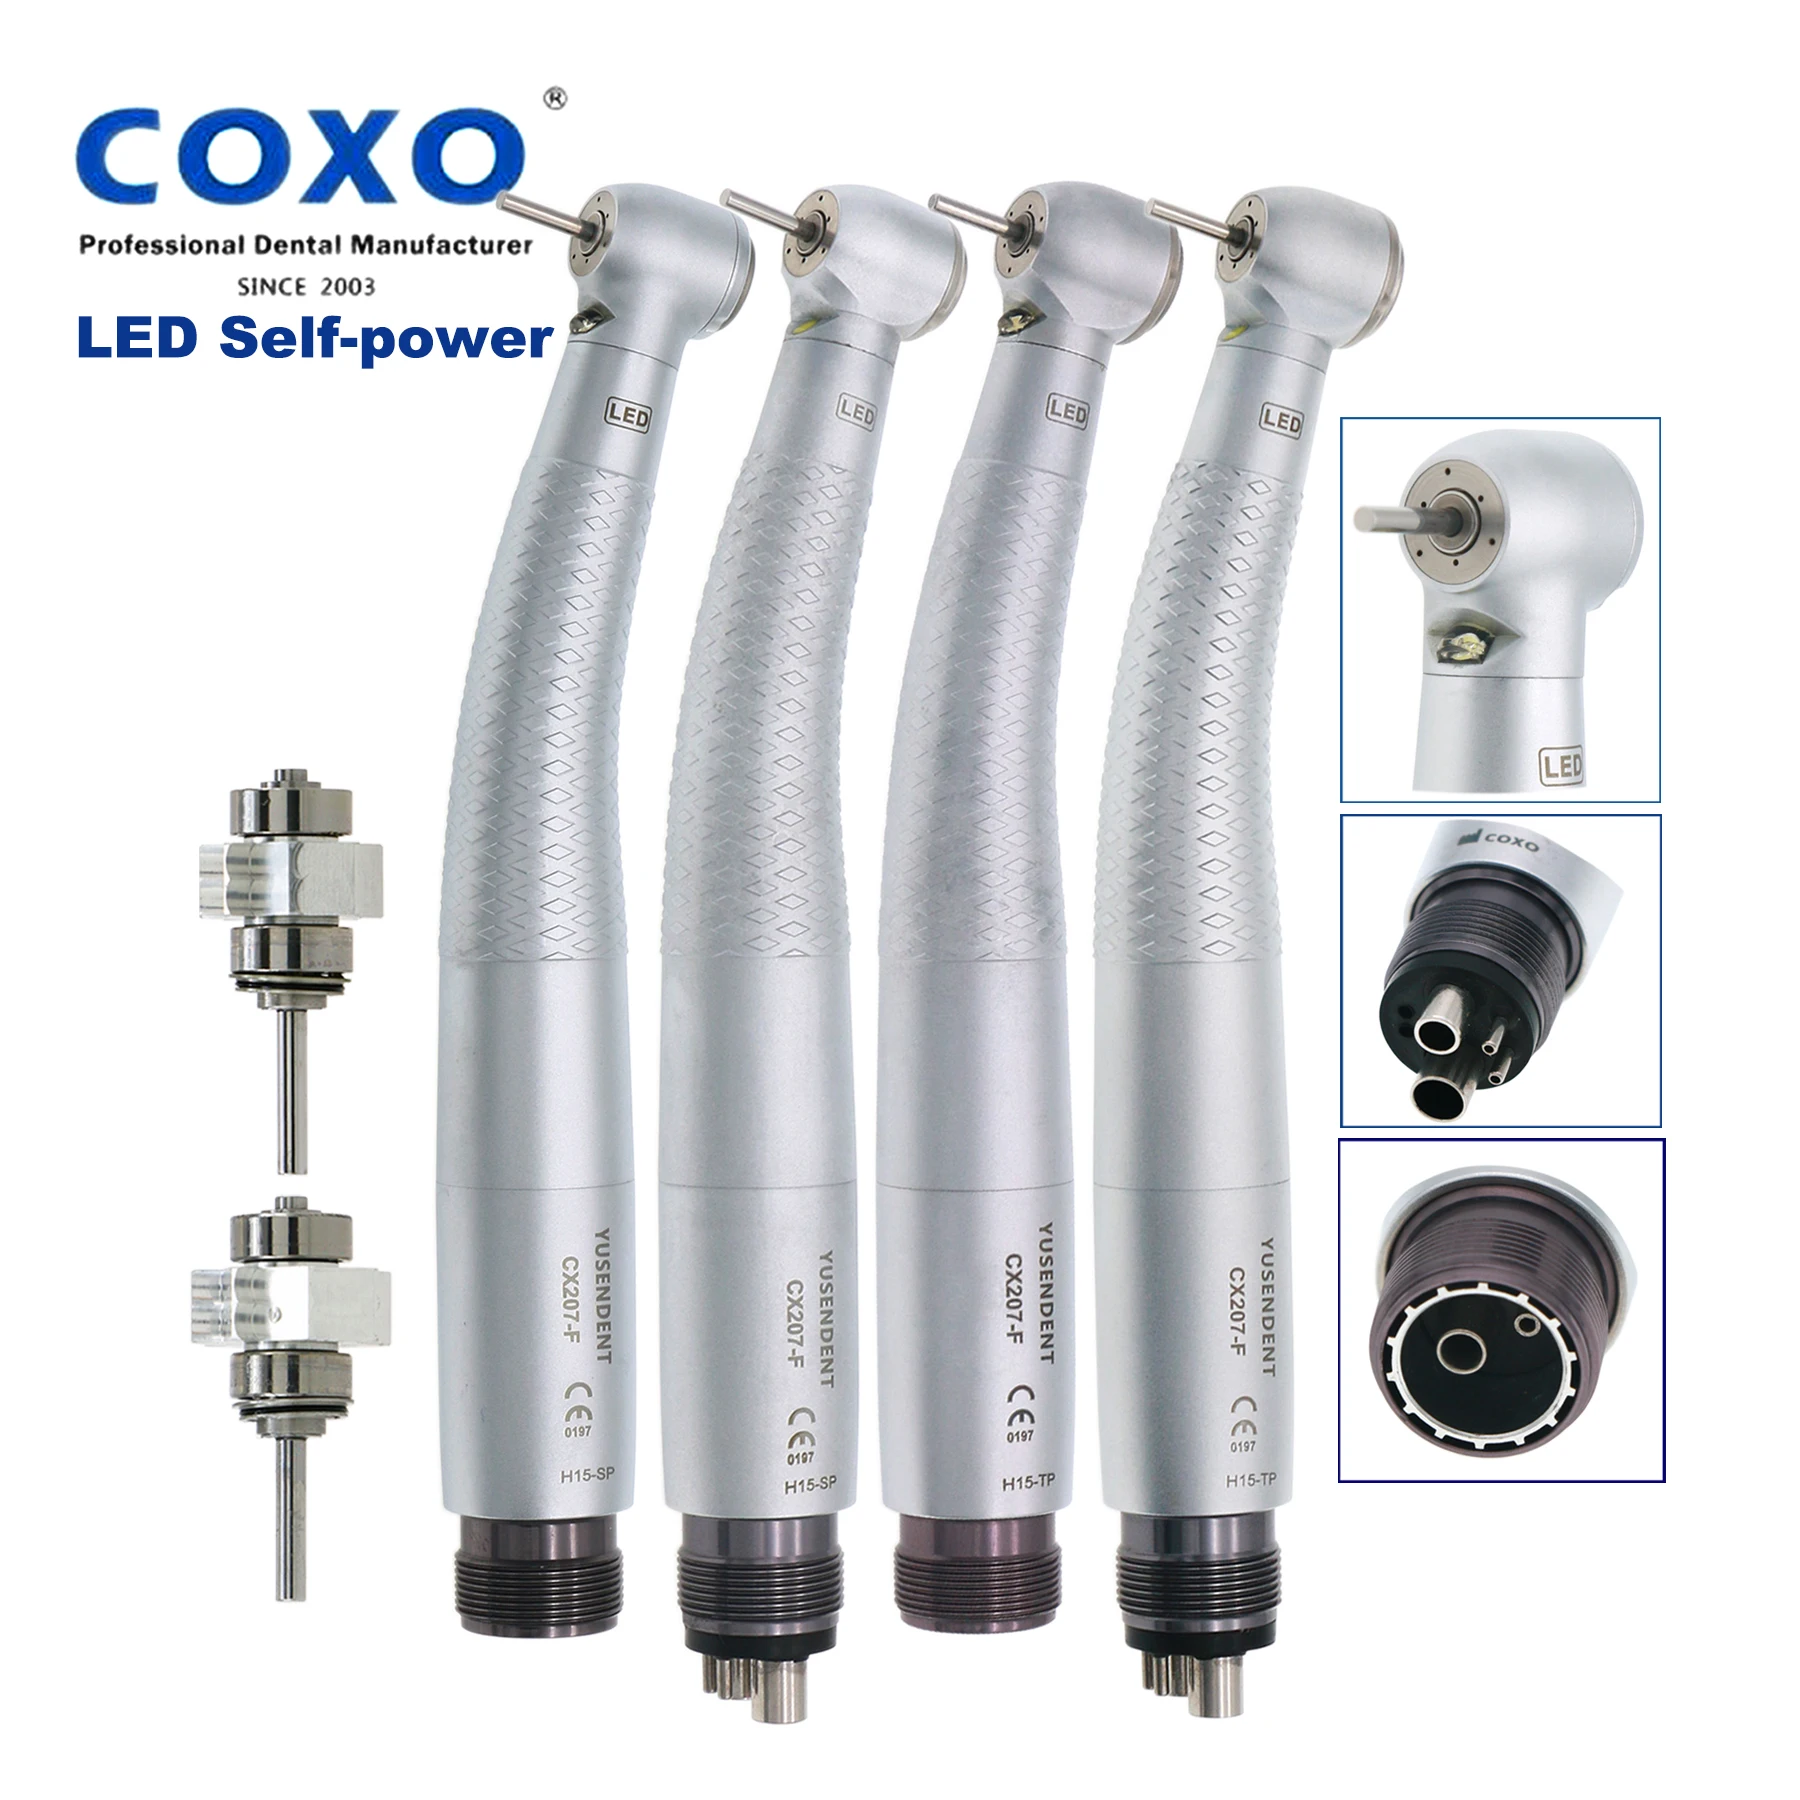 

NSK PANA MAX Type COXO YUSENDENT Dental E Generator Self Power High Speed Air Turbine LED Handpiece 2 4 Holes